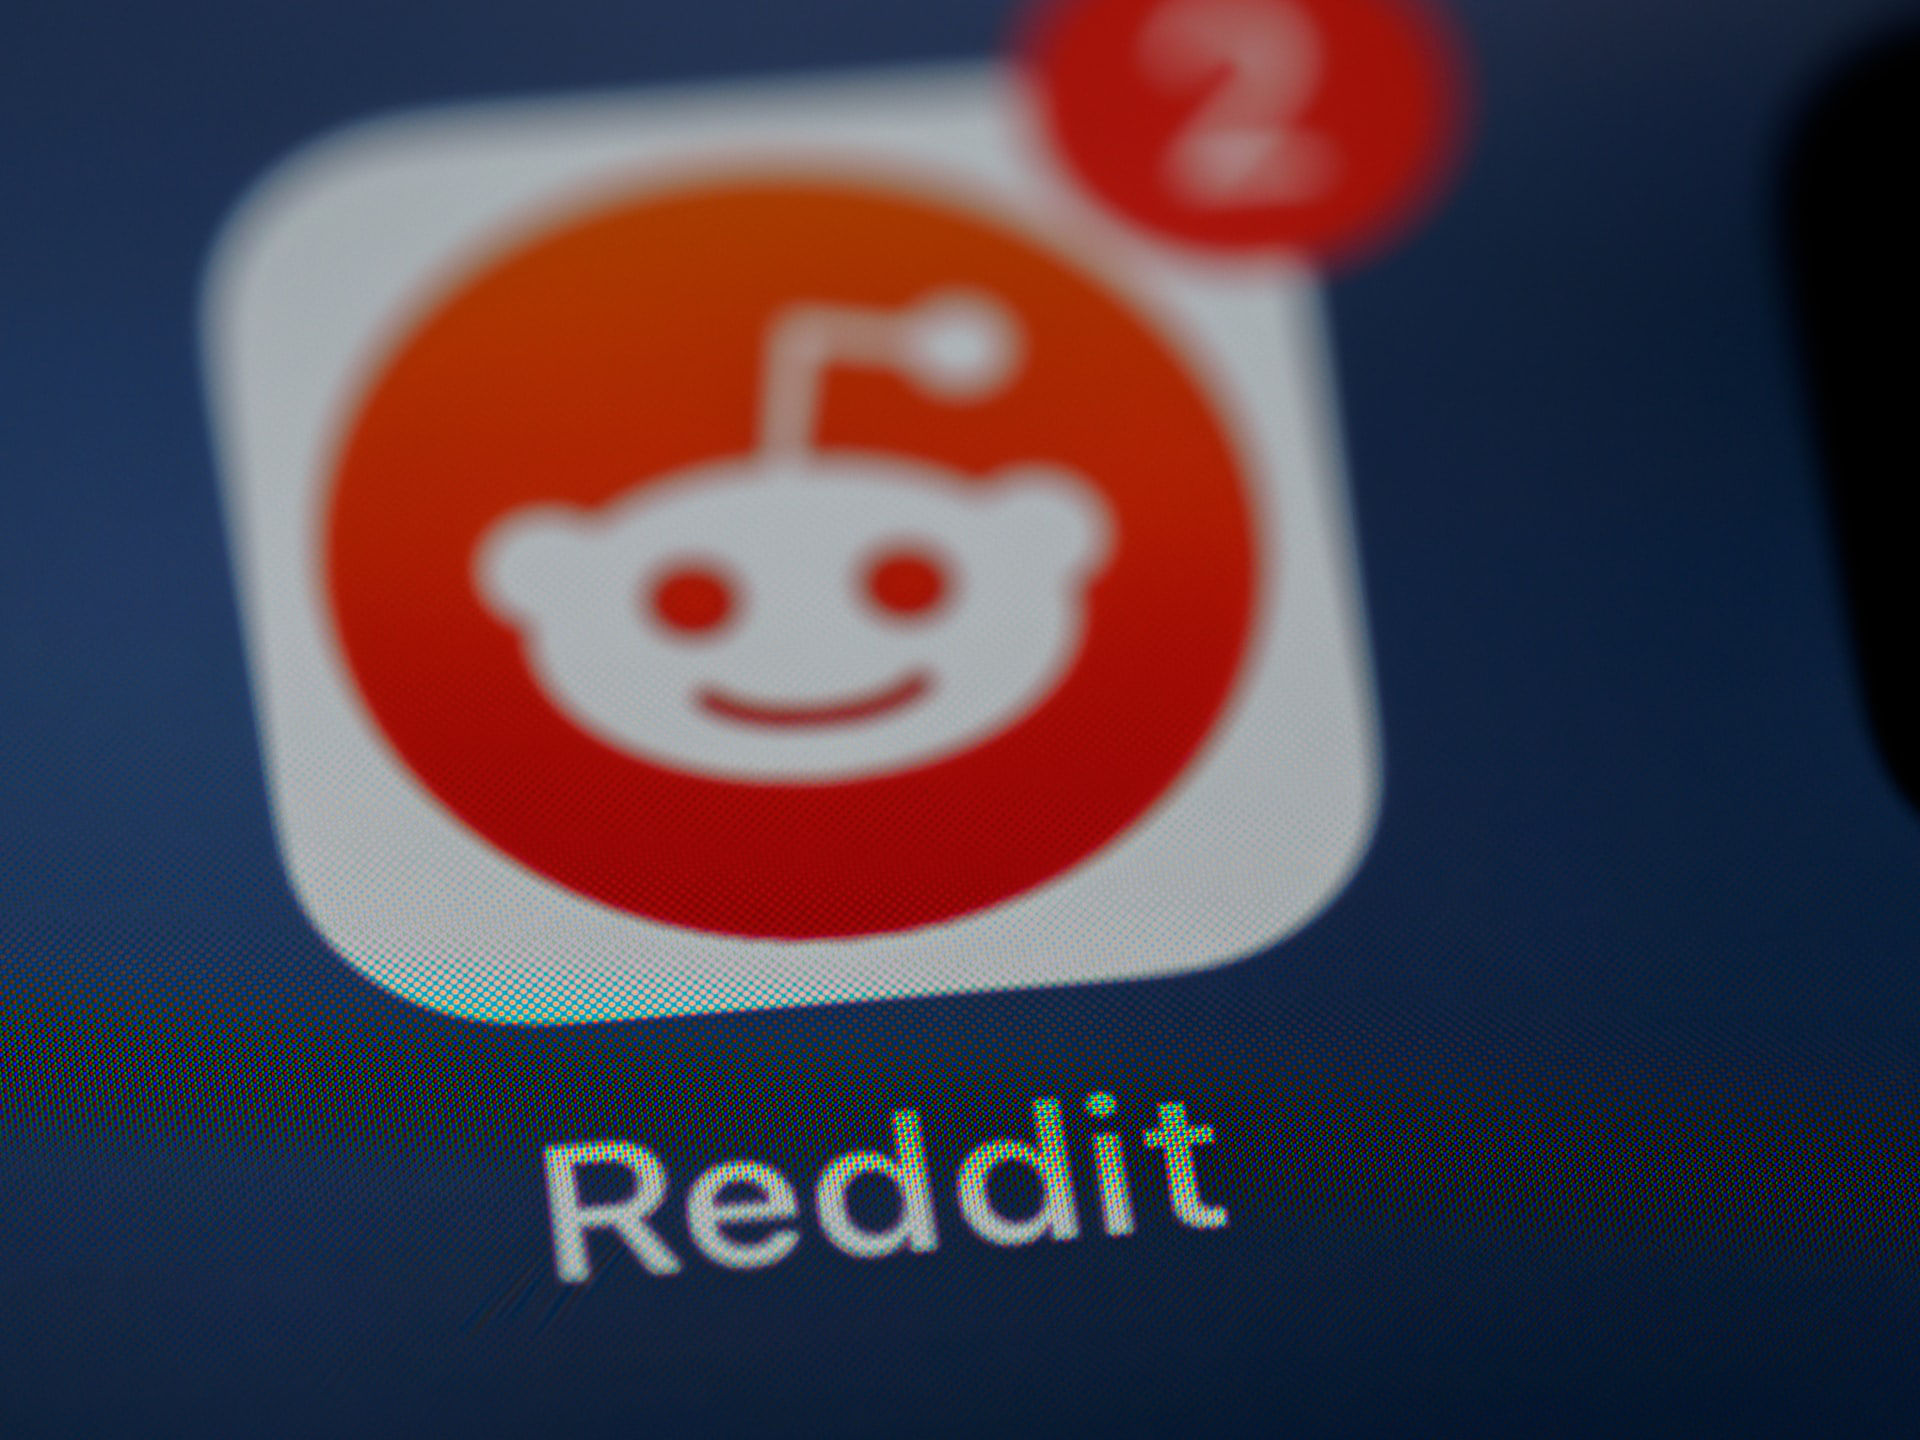 Reddit's app icon on iPhone